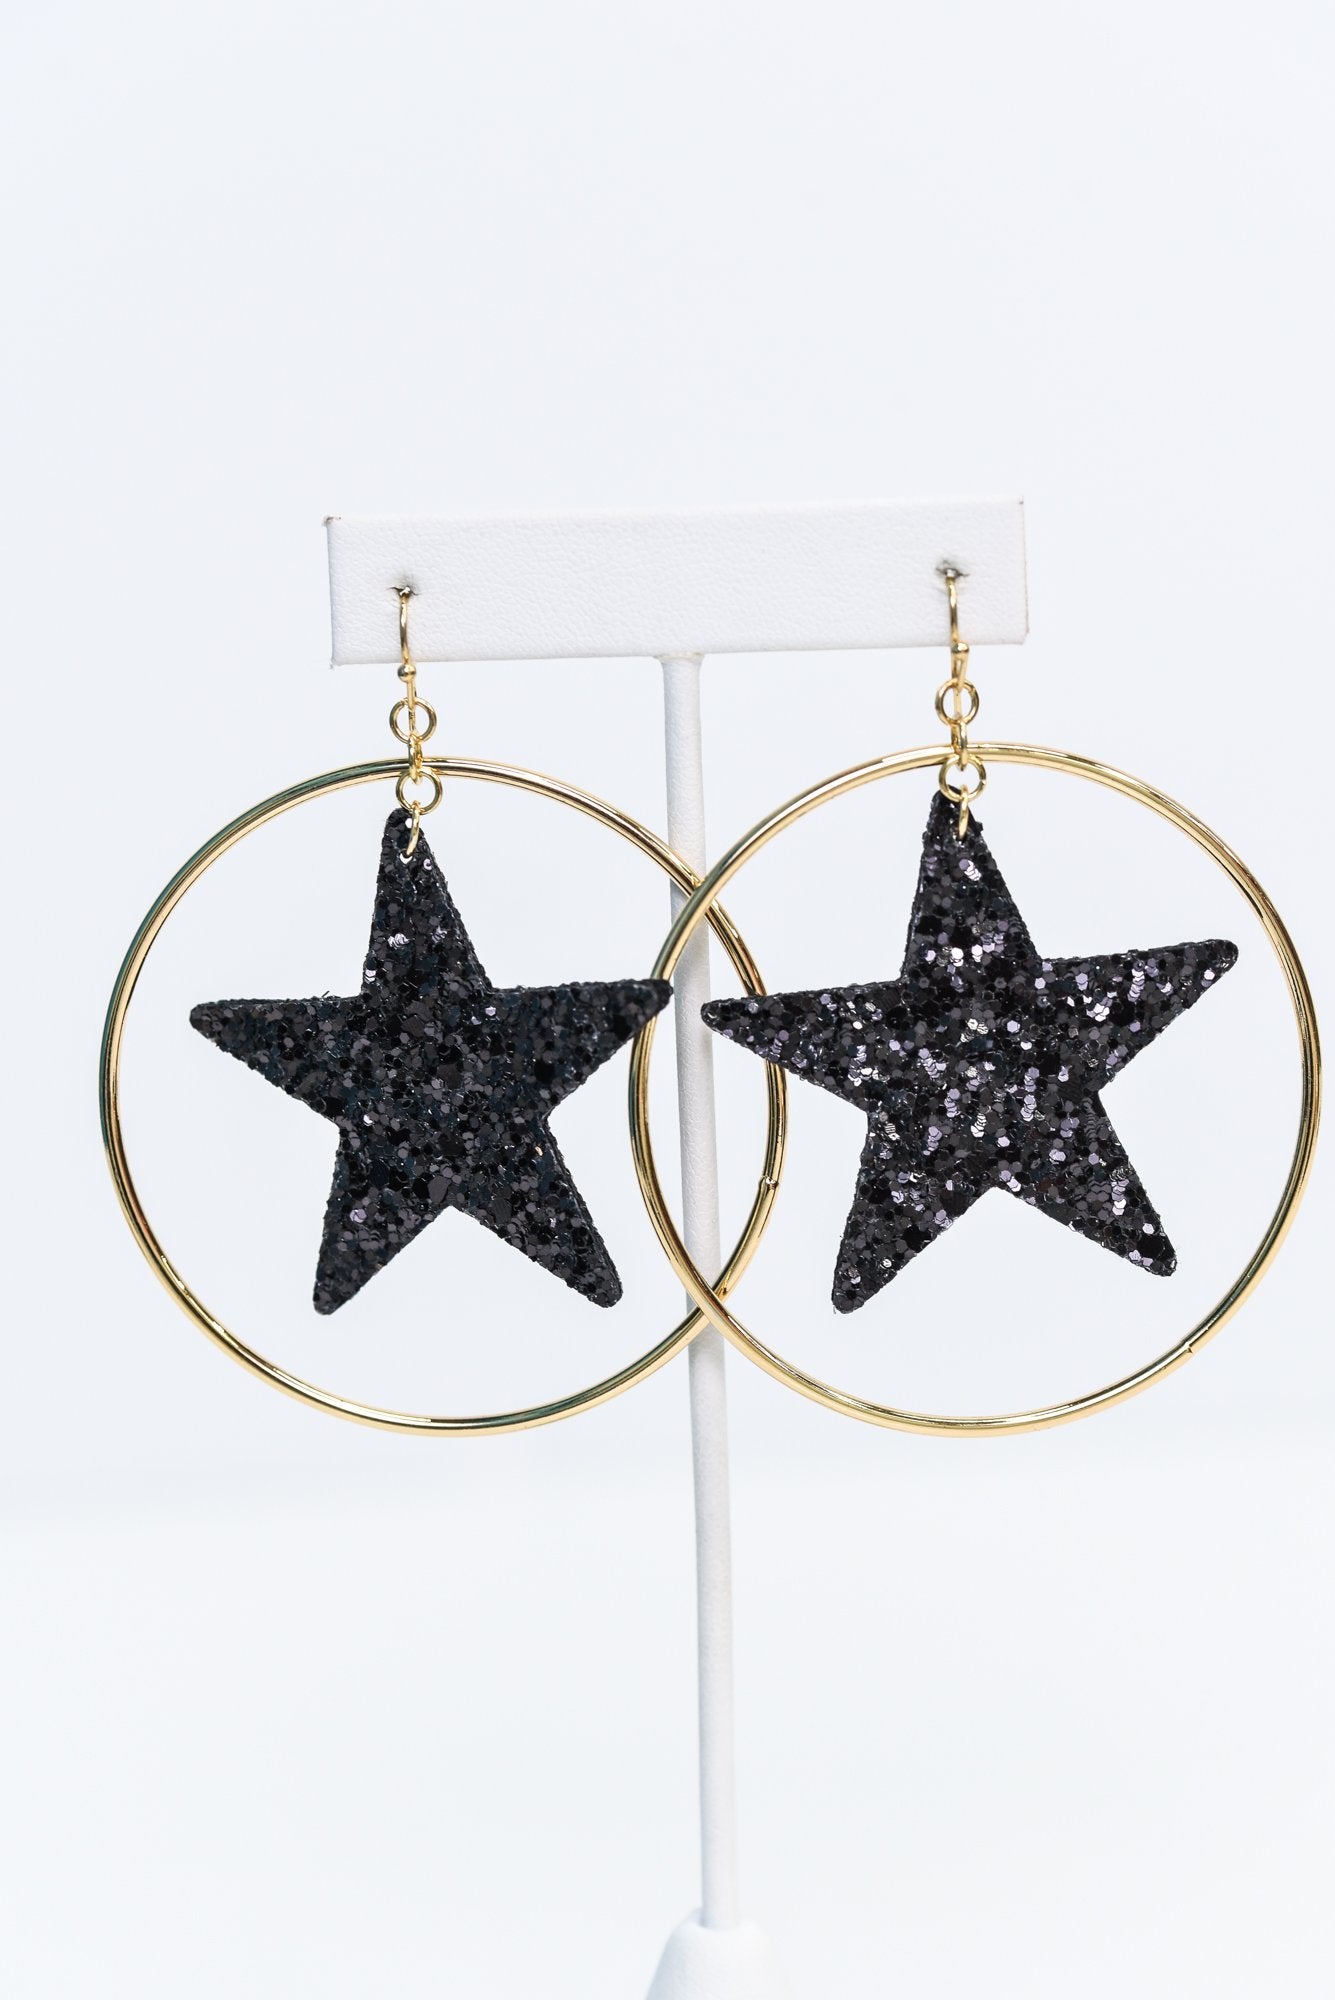 Black Glitter Star Gold Hoop Earrings - EAR4149BK